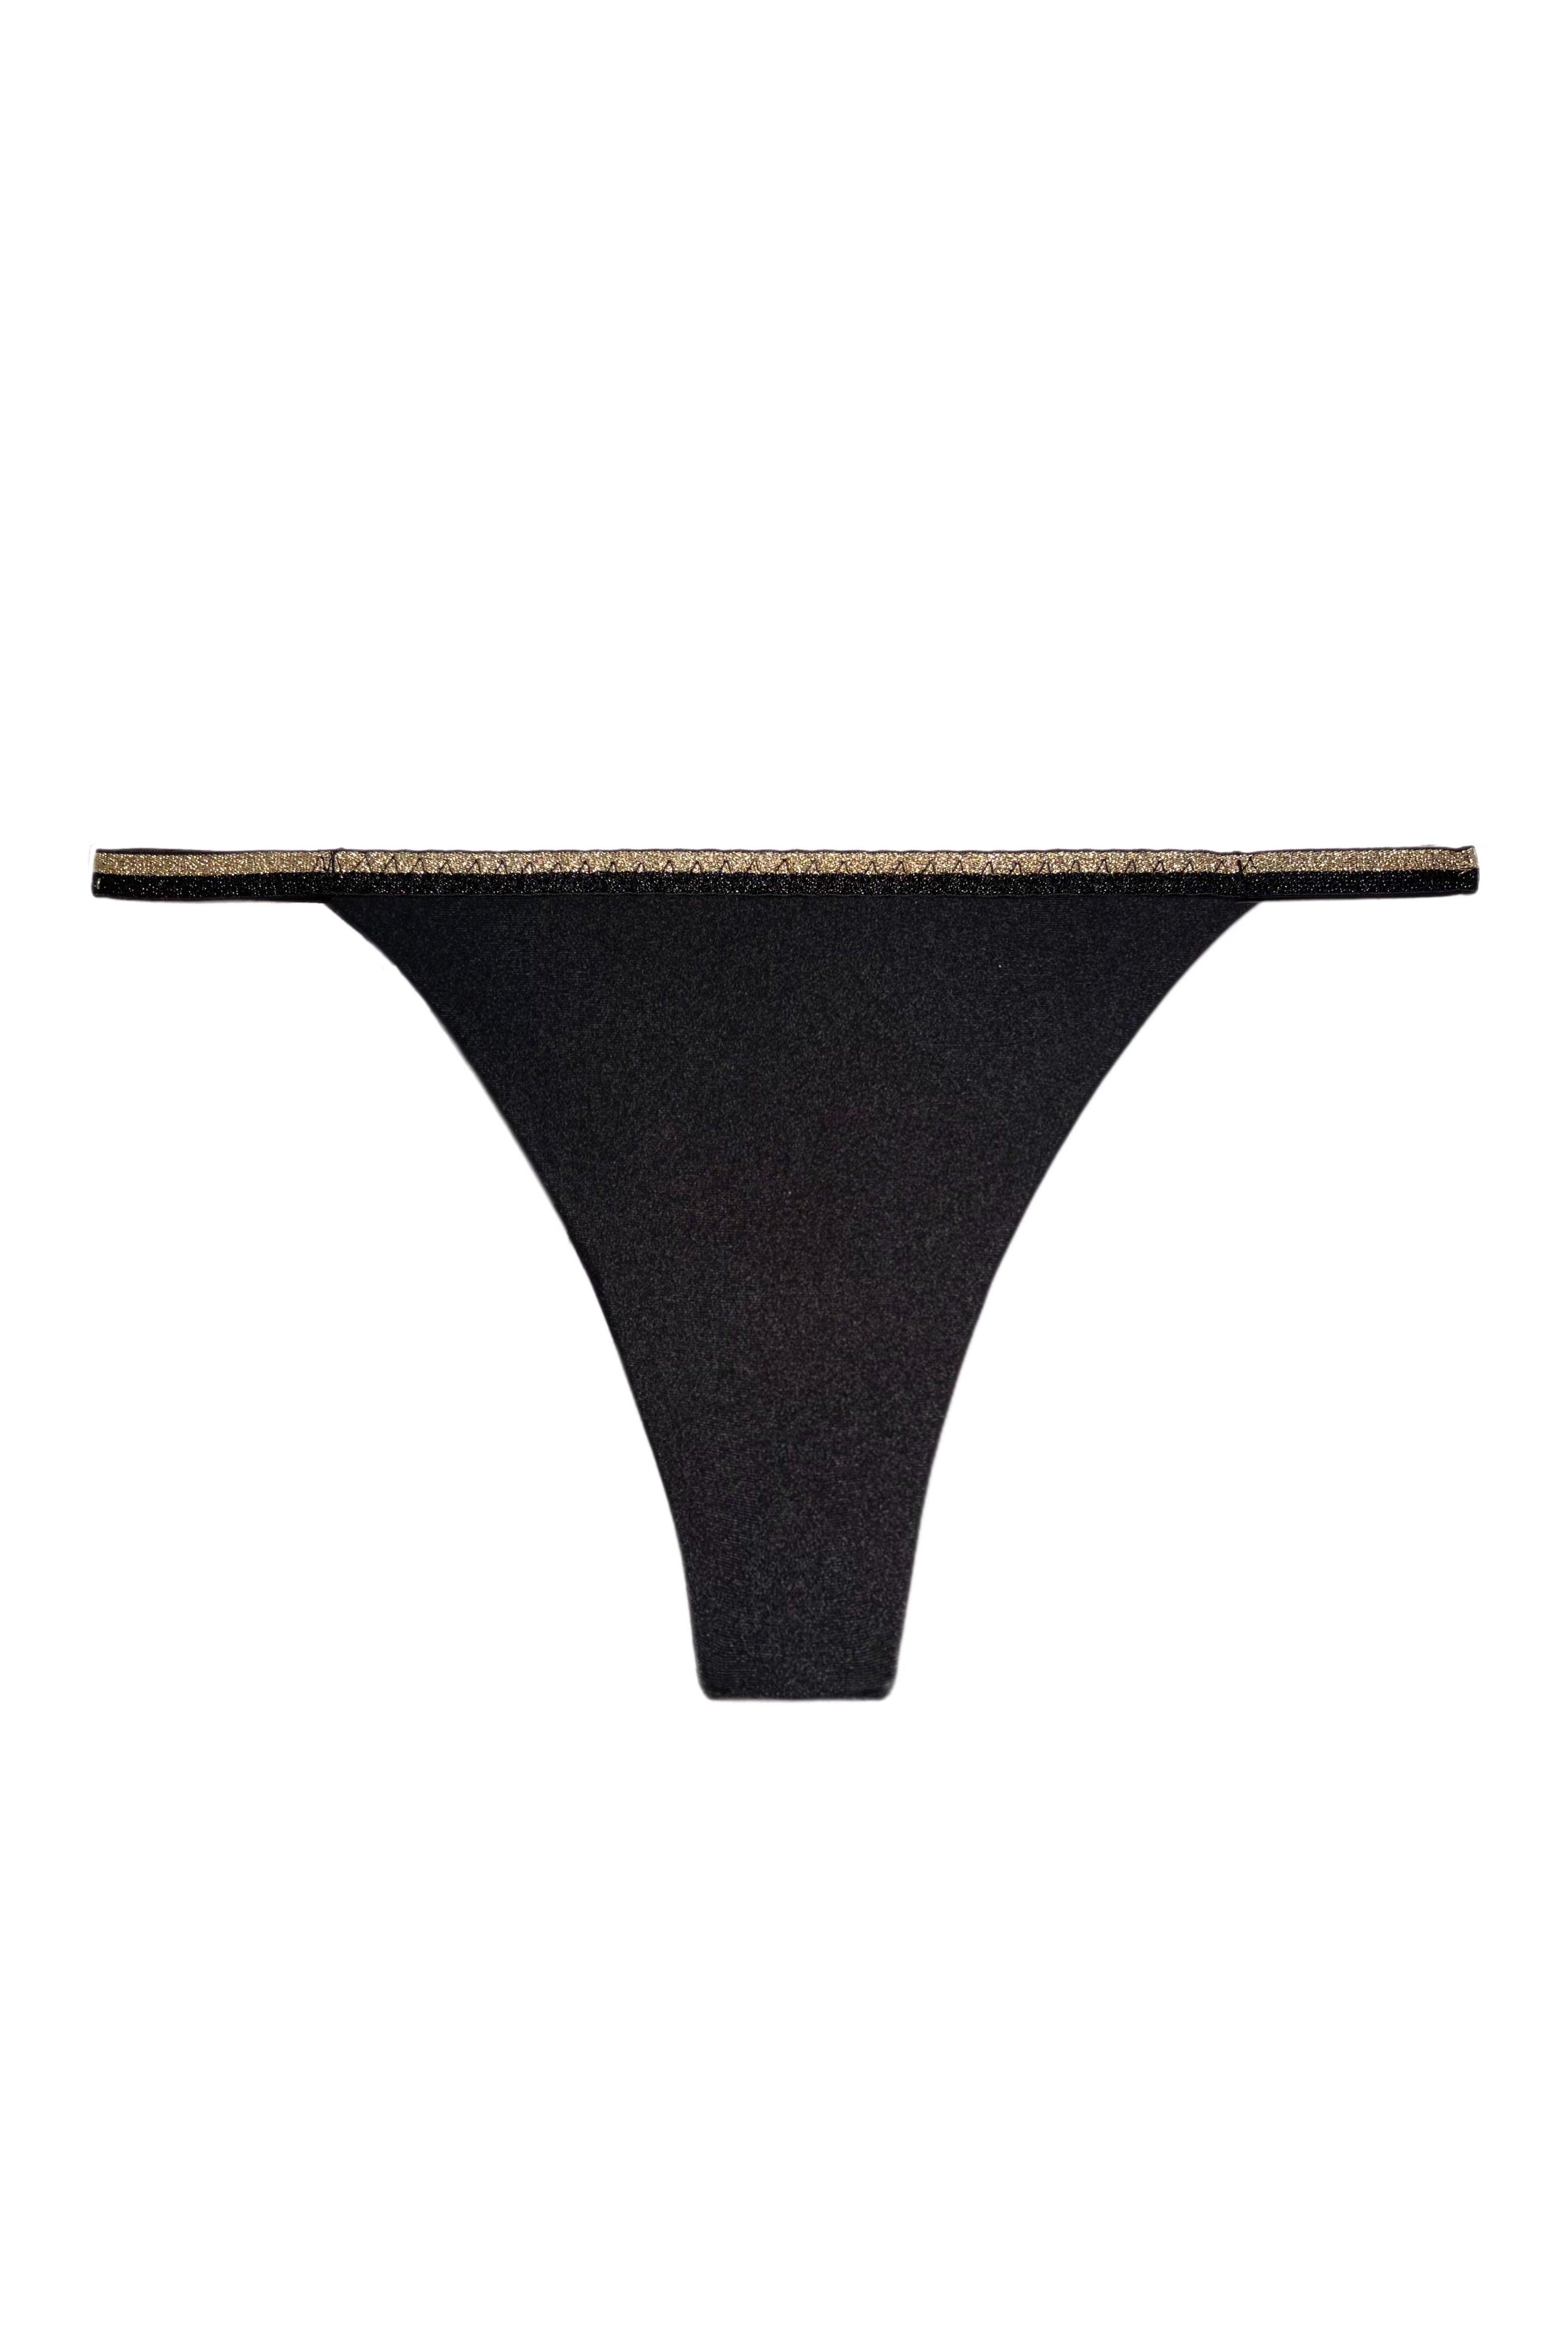 Flexy Black gold thongs - yesUndress